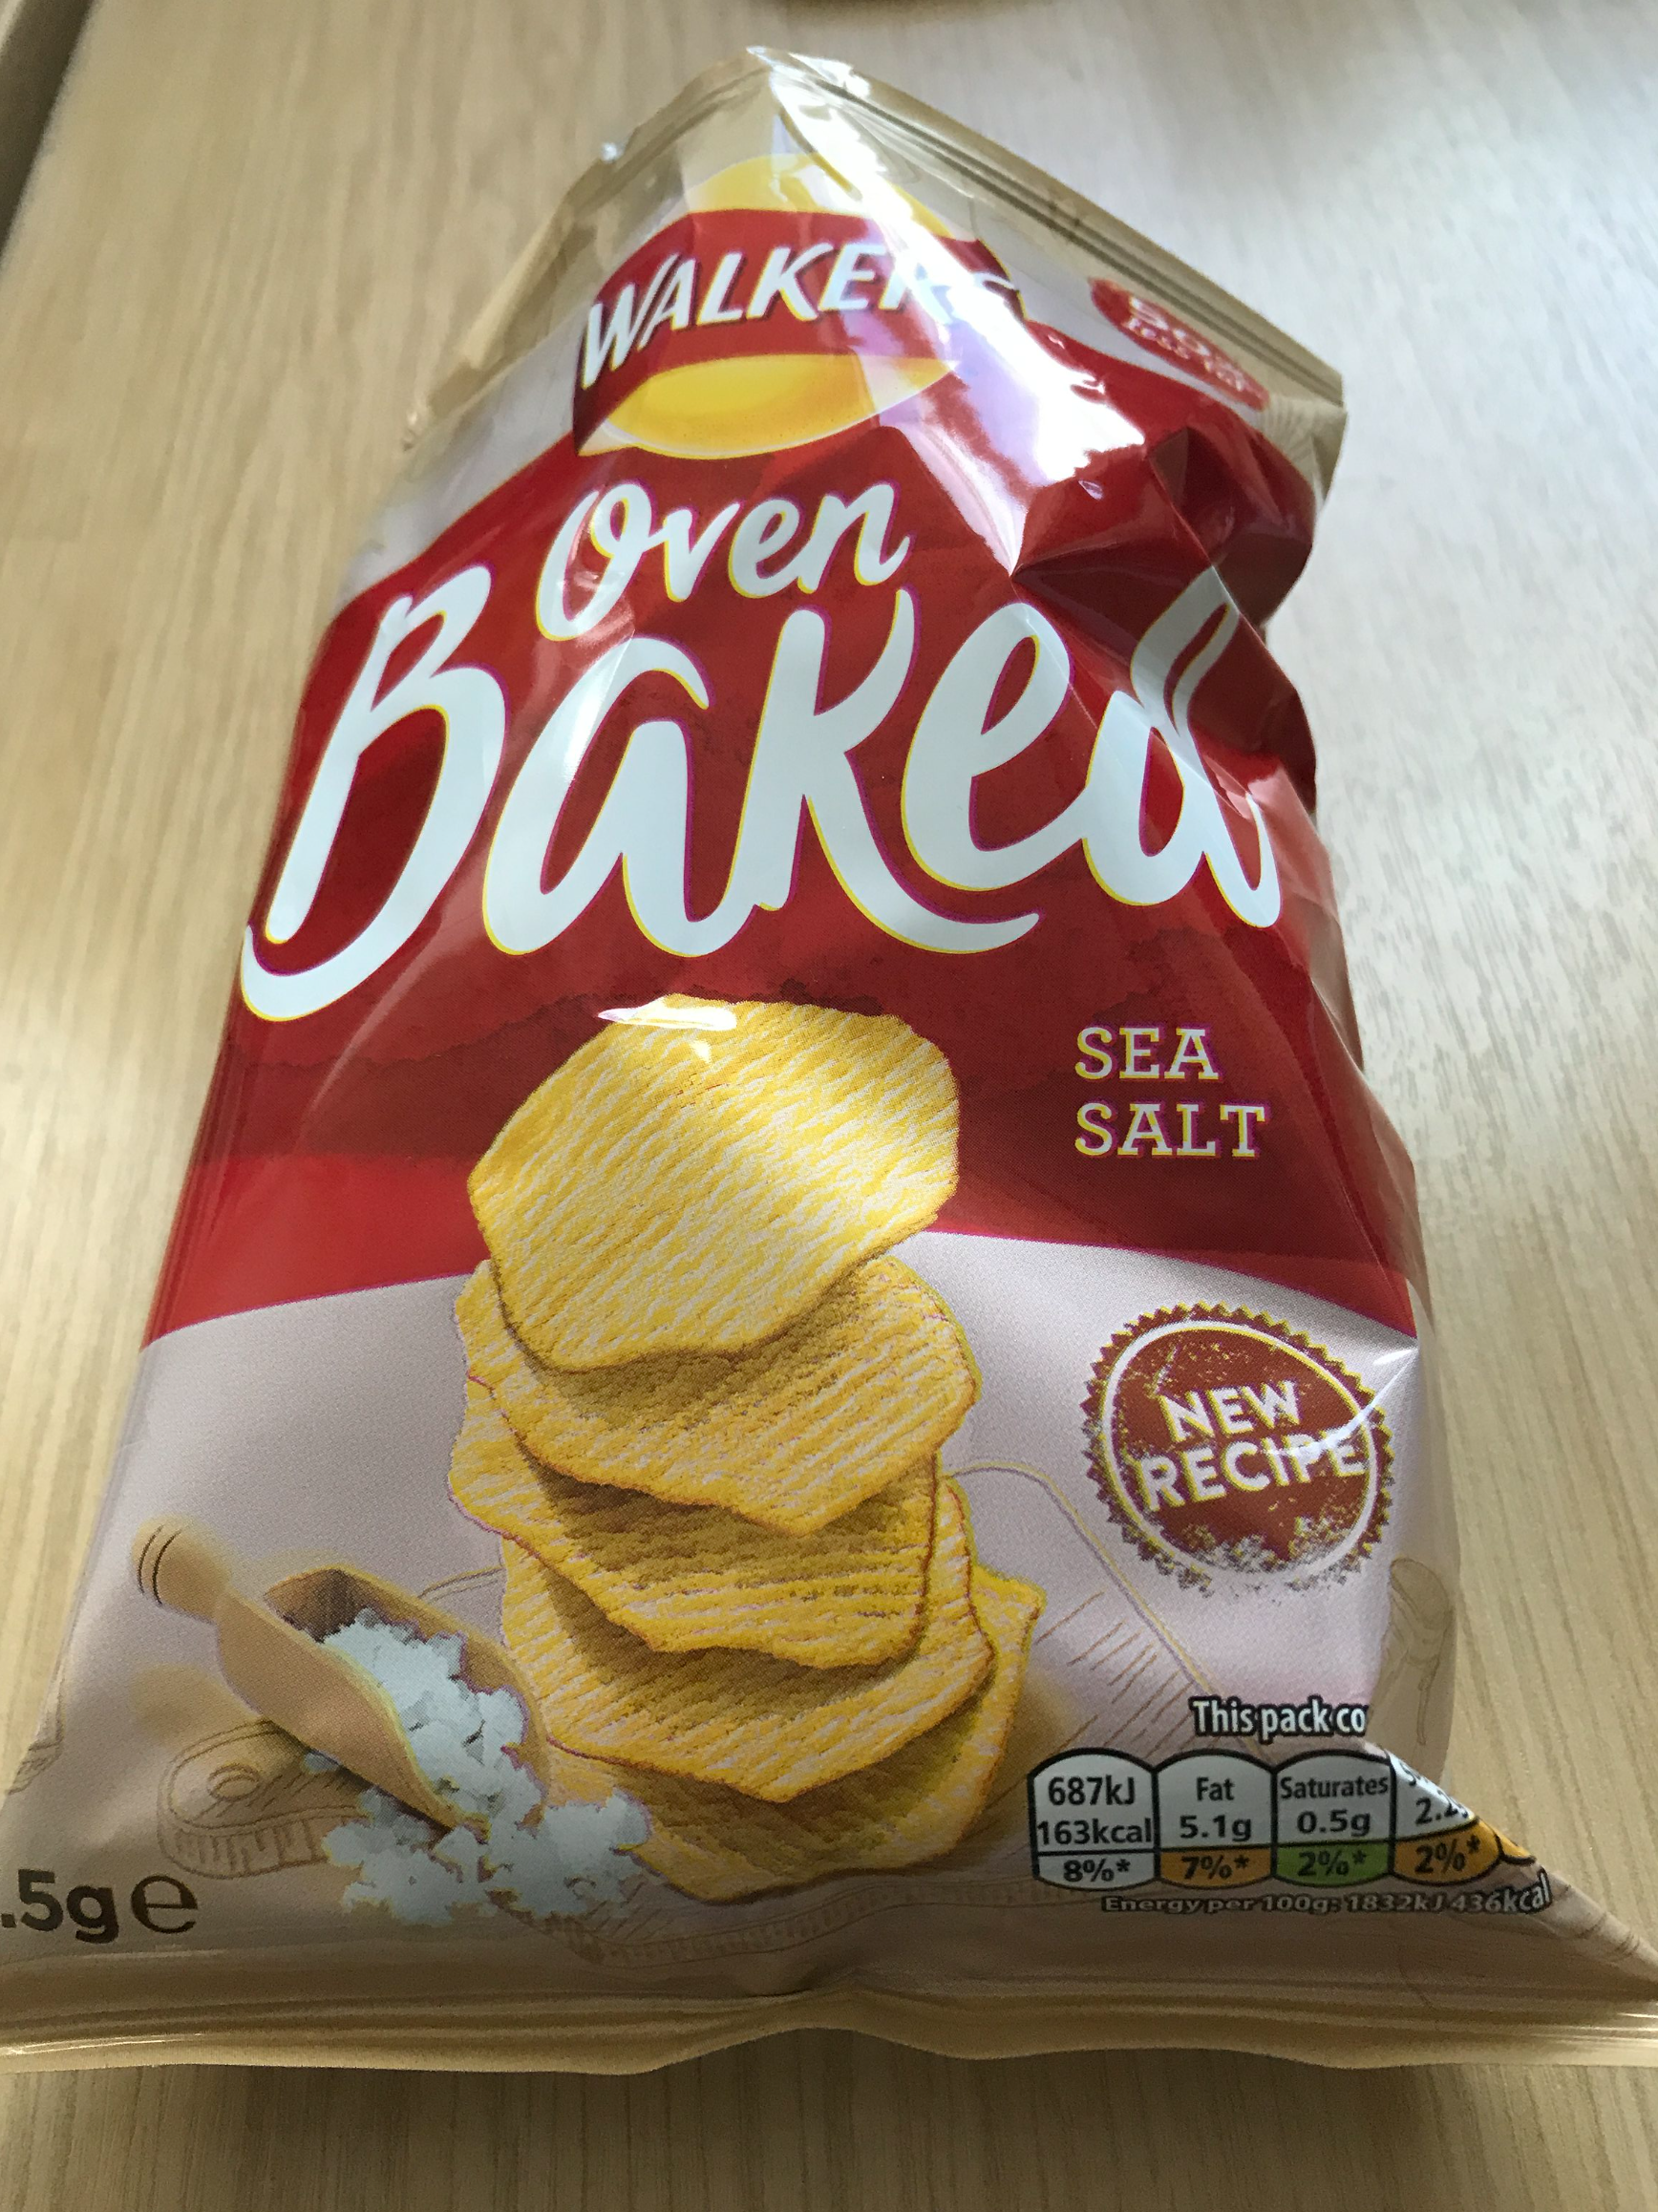 Packet of Walkers oven baked sea salt crisps credit Hazel Nicholson CC BY 2.0